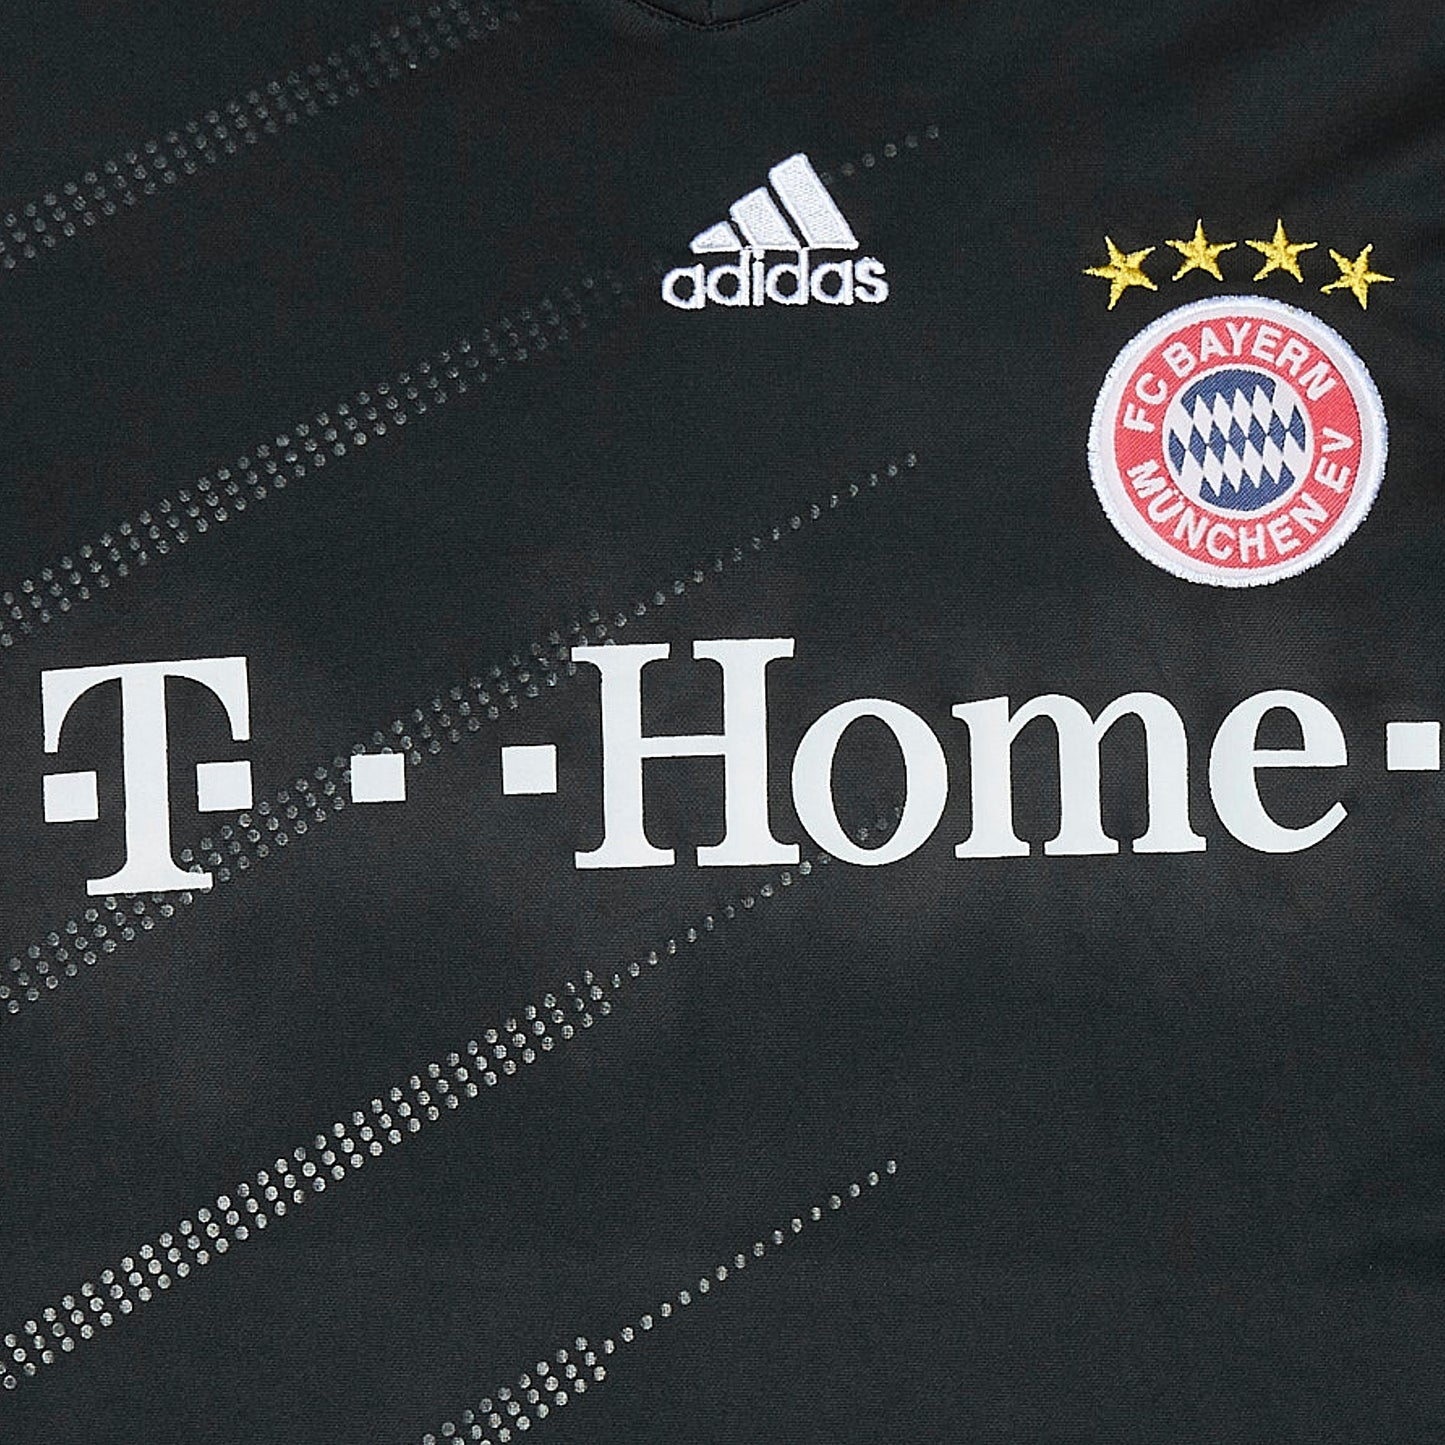 Bayern Munich Longsleeve Shirt - XL